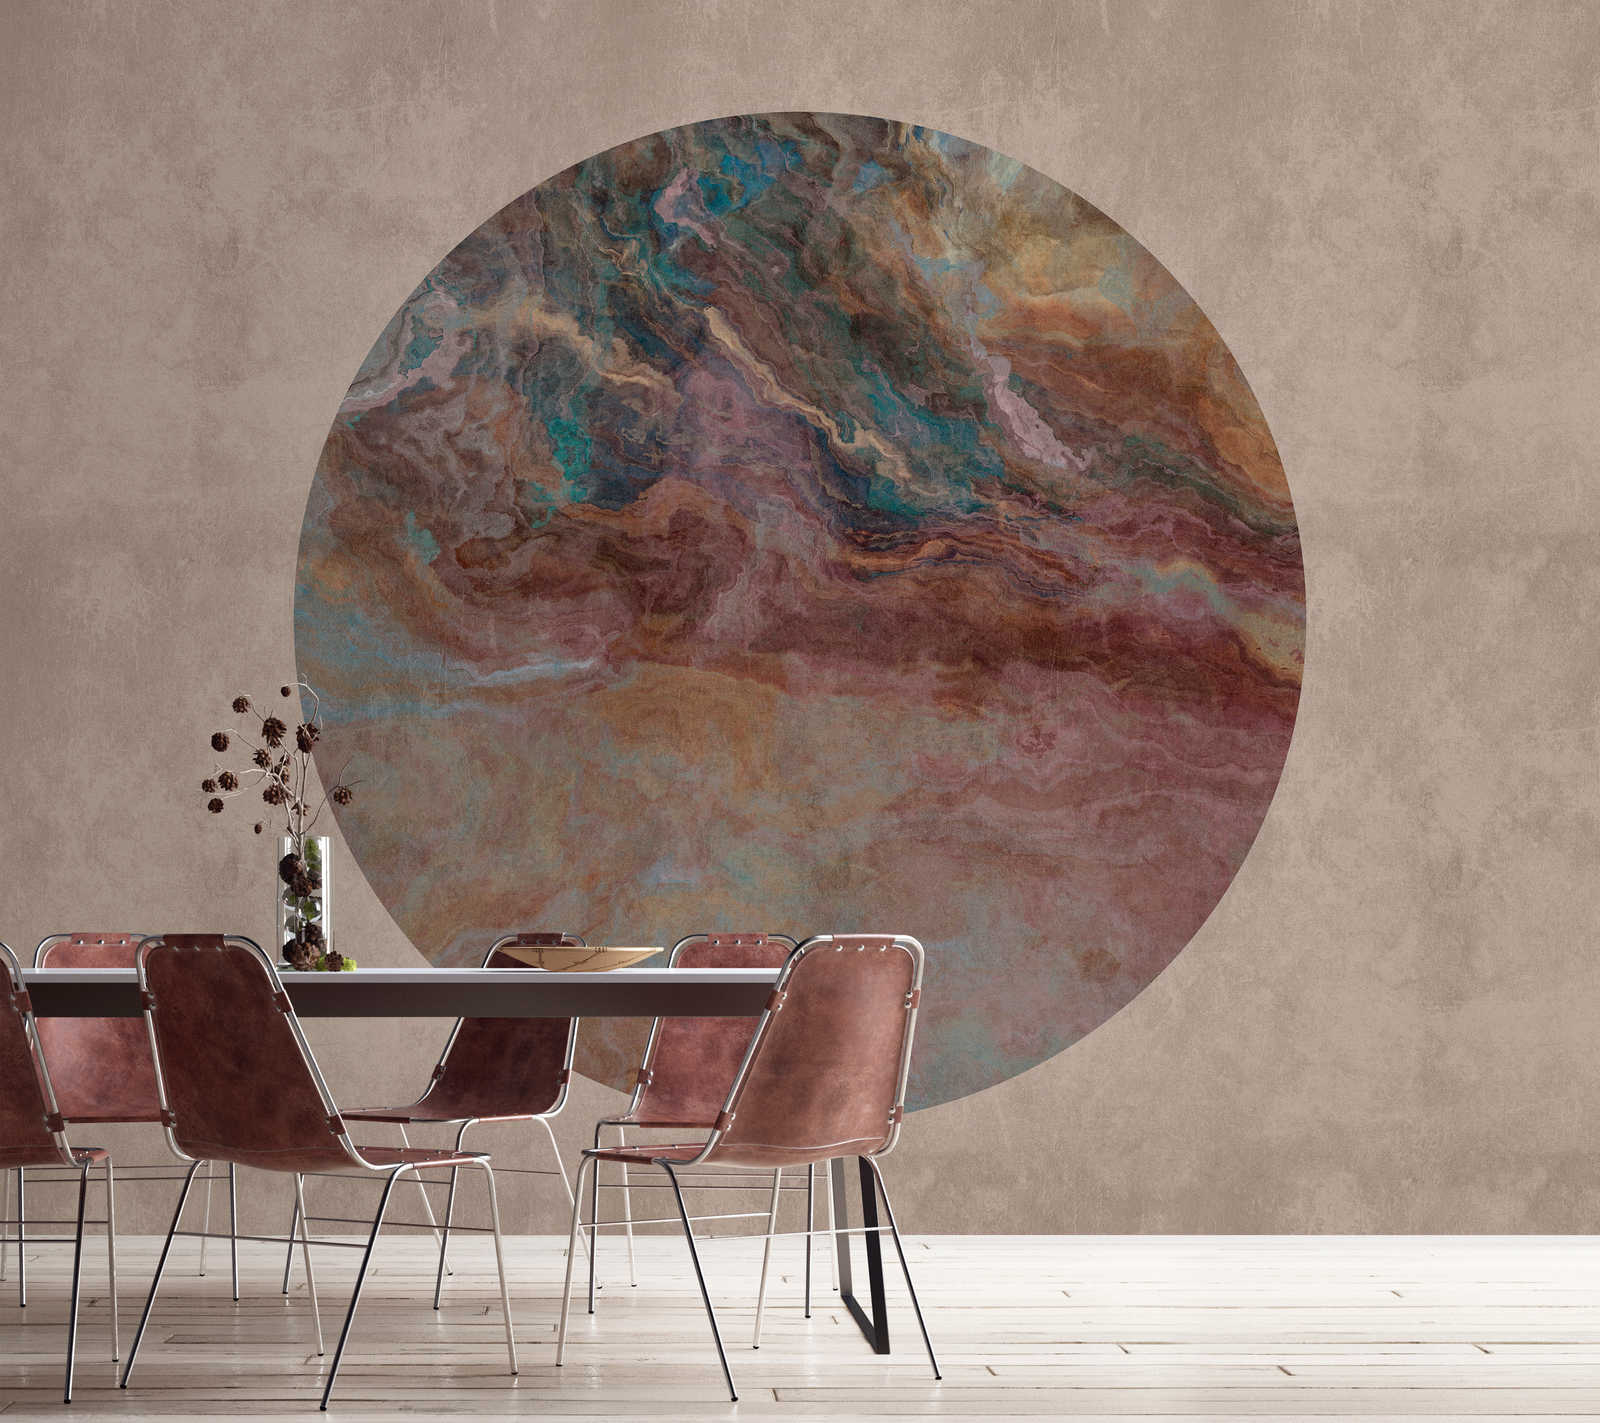             Jupiter 2 - mural colourful marble circle & plaster look
        